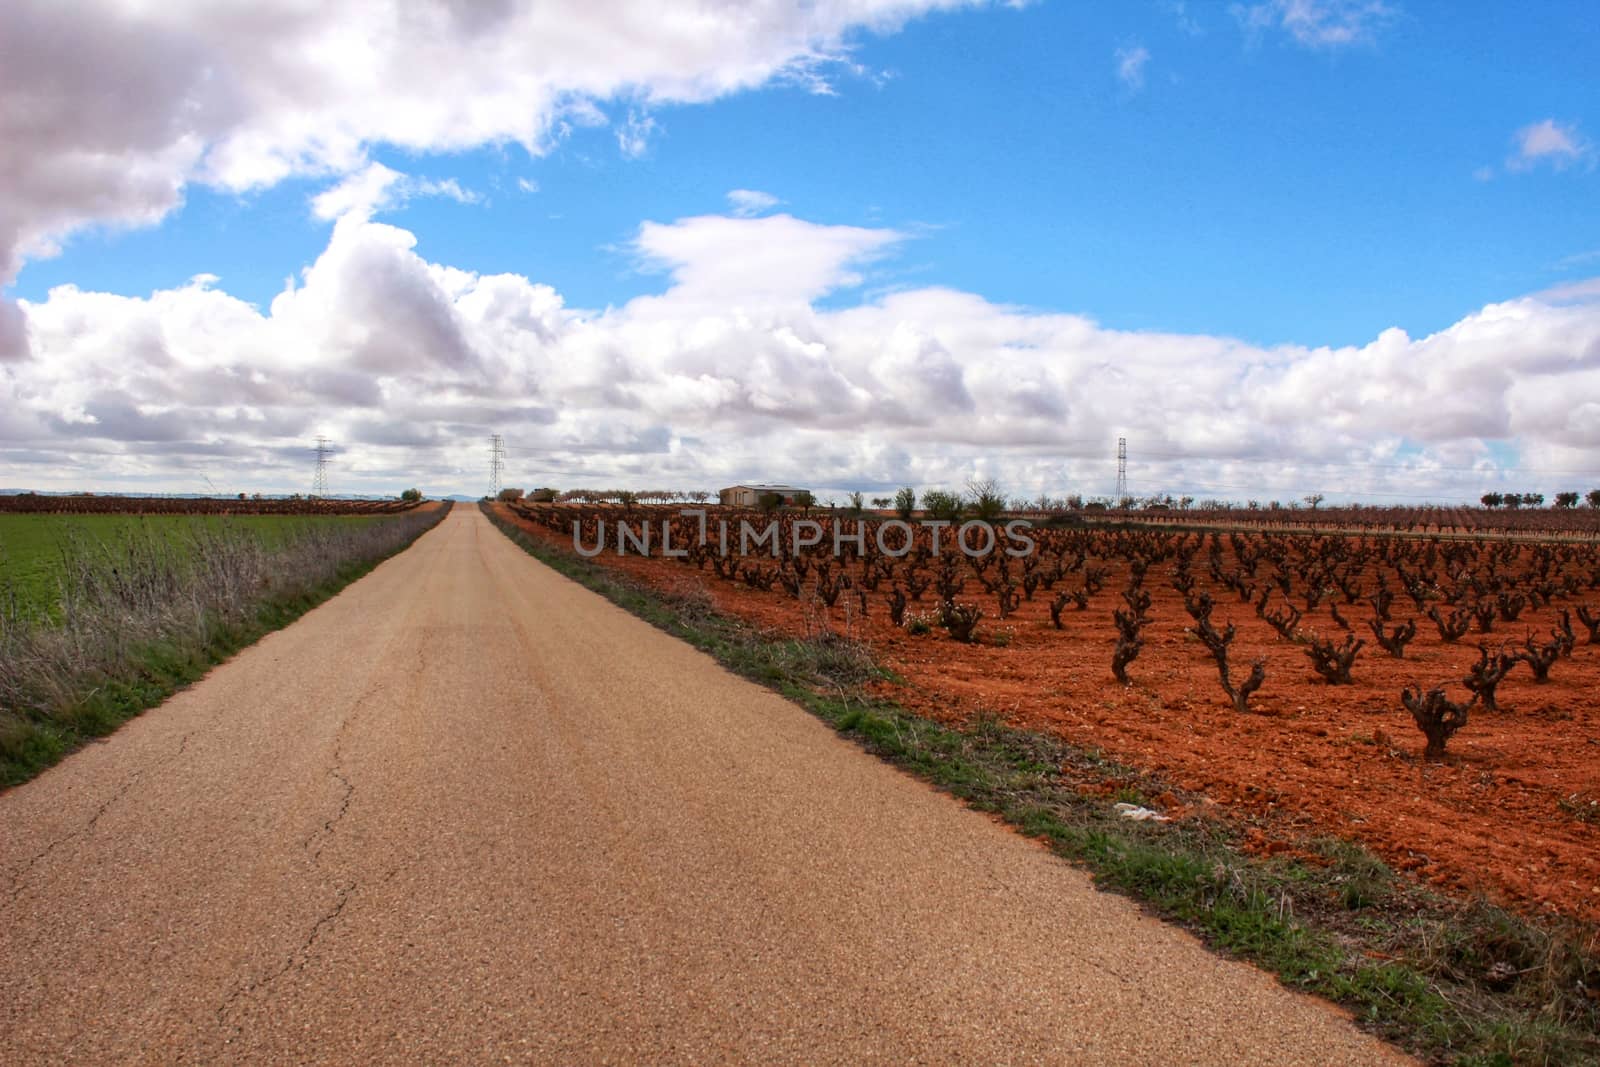 Landscape of vineyards under gray sky next to the road in Castilla la Mancha by soniabonet